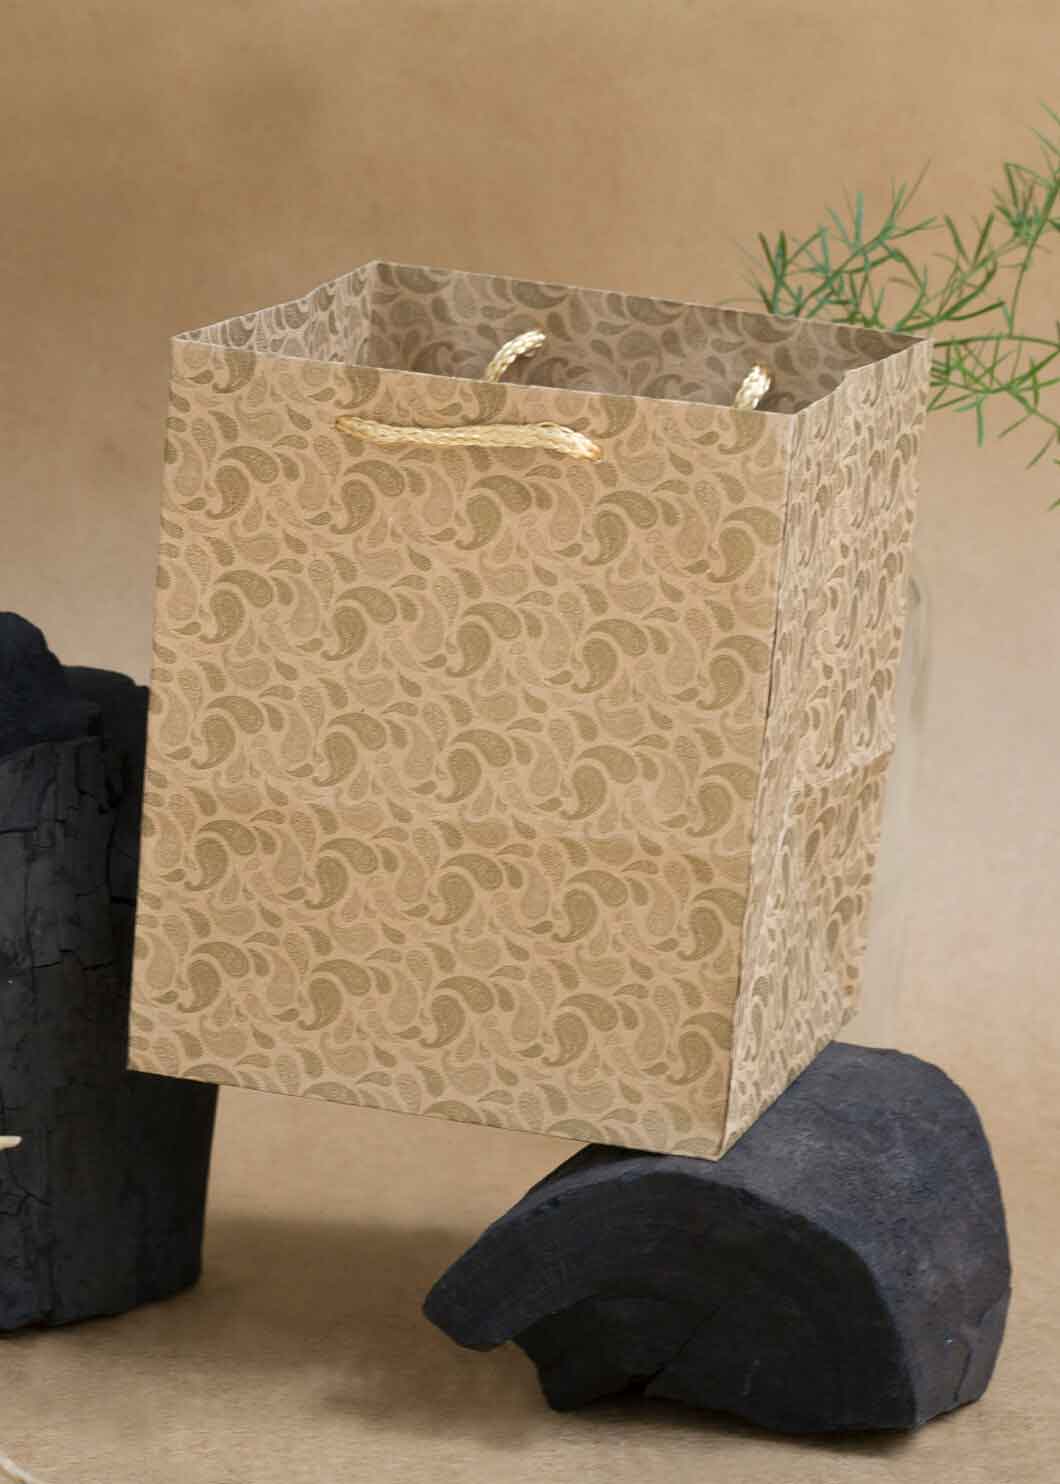 Craft Paper Mandala Pattern - Craft Paper Bag - Golden Silver Red - 5x5 Paper Bag